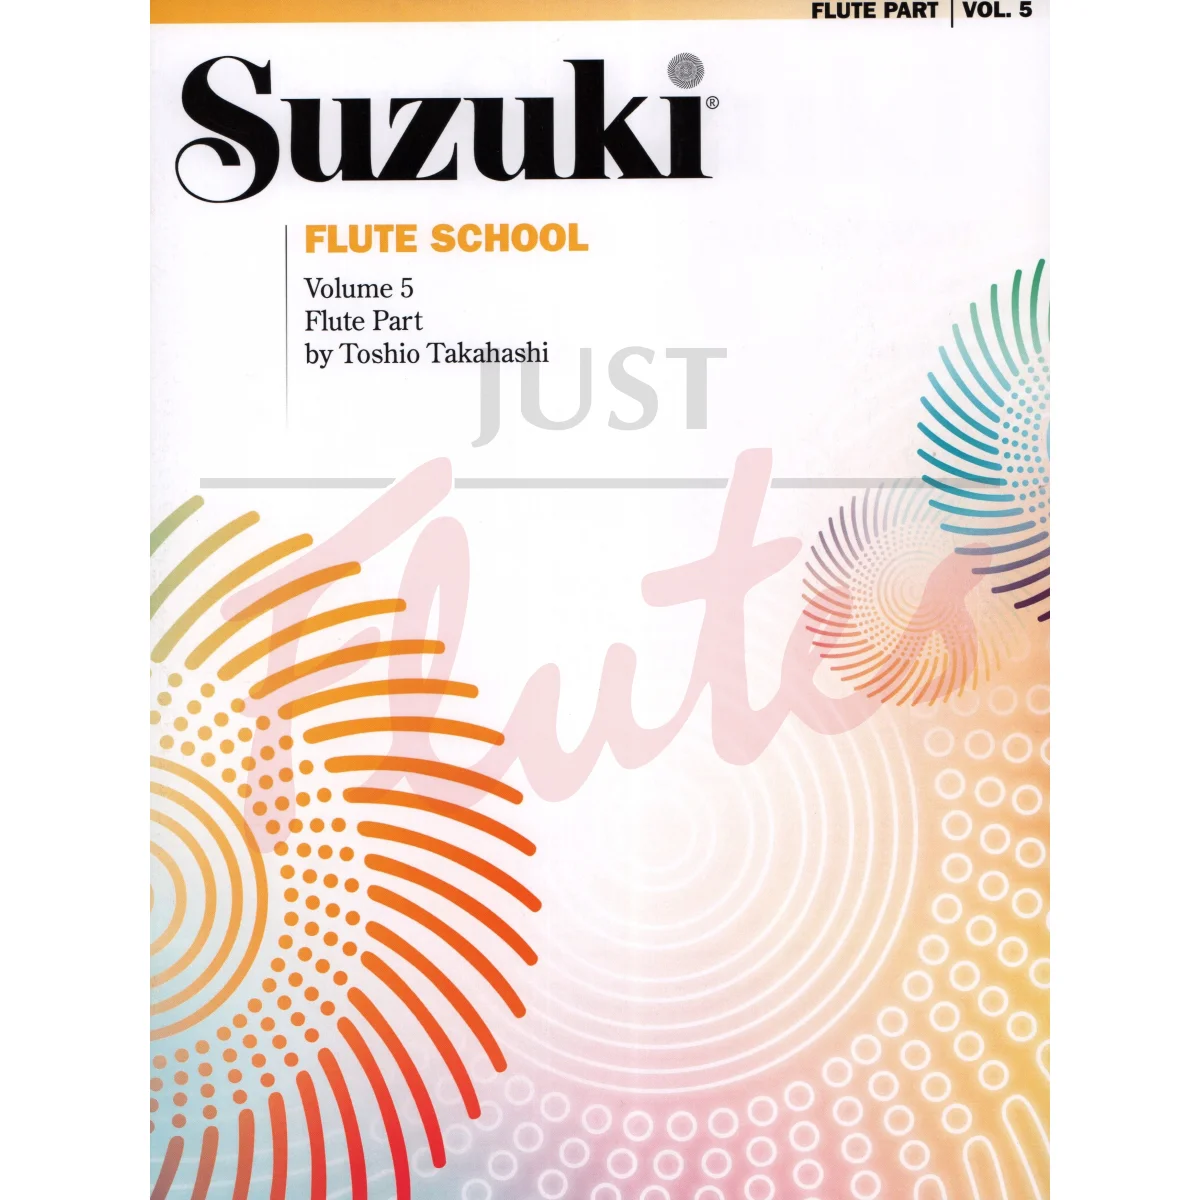 Suzuki Flute School Vol 5 (Revised Edition) [Flute Part]